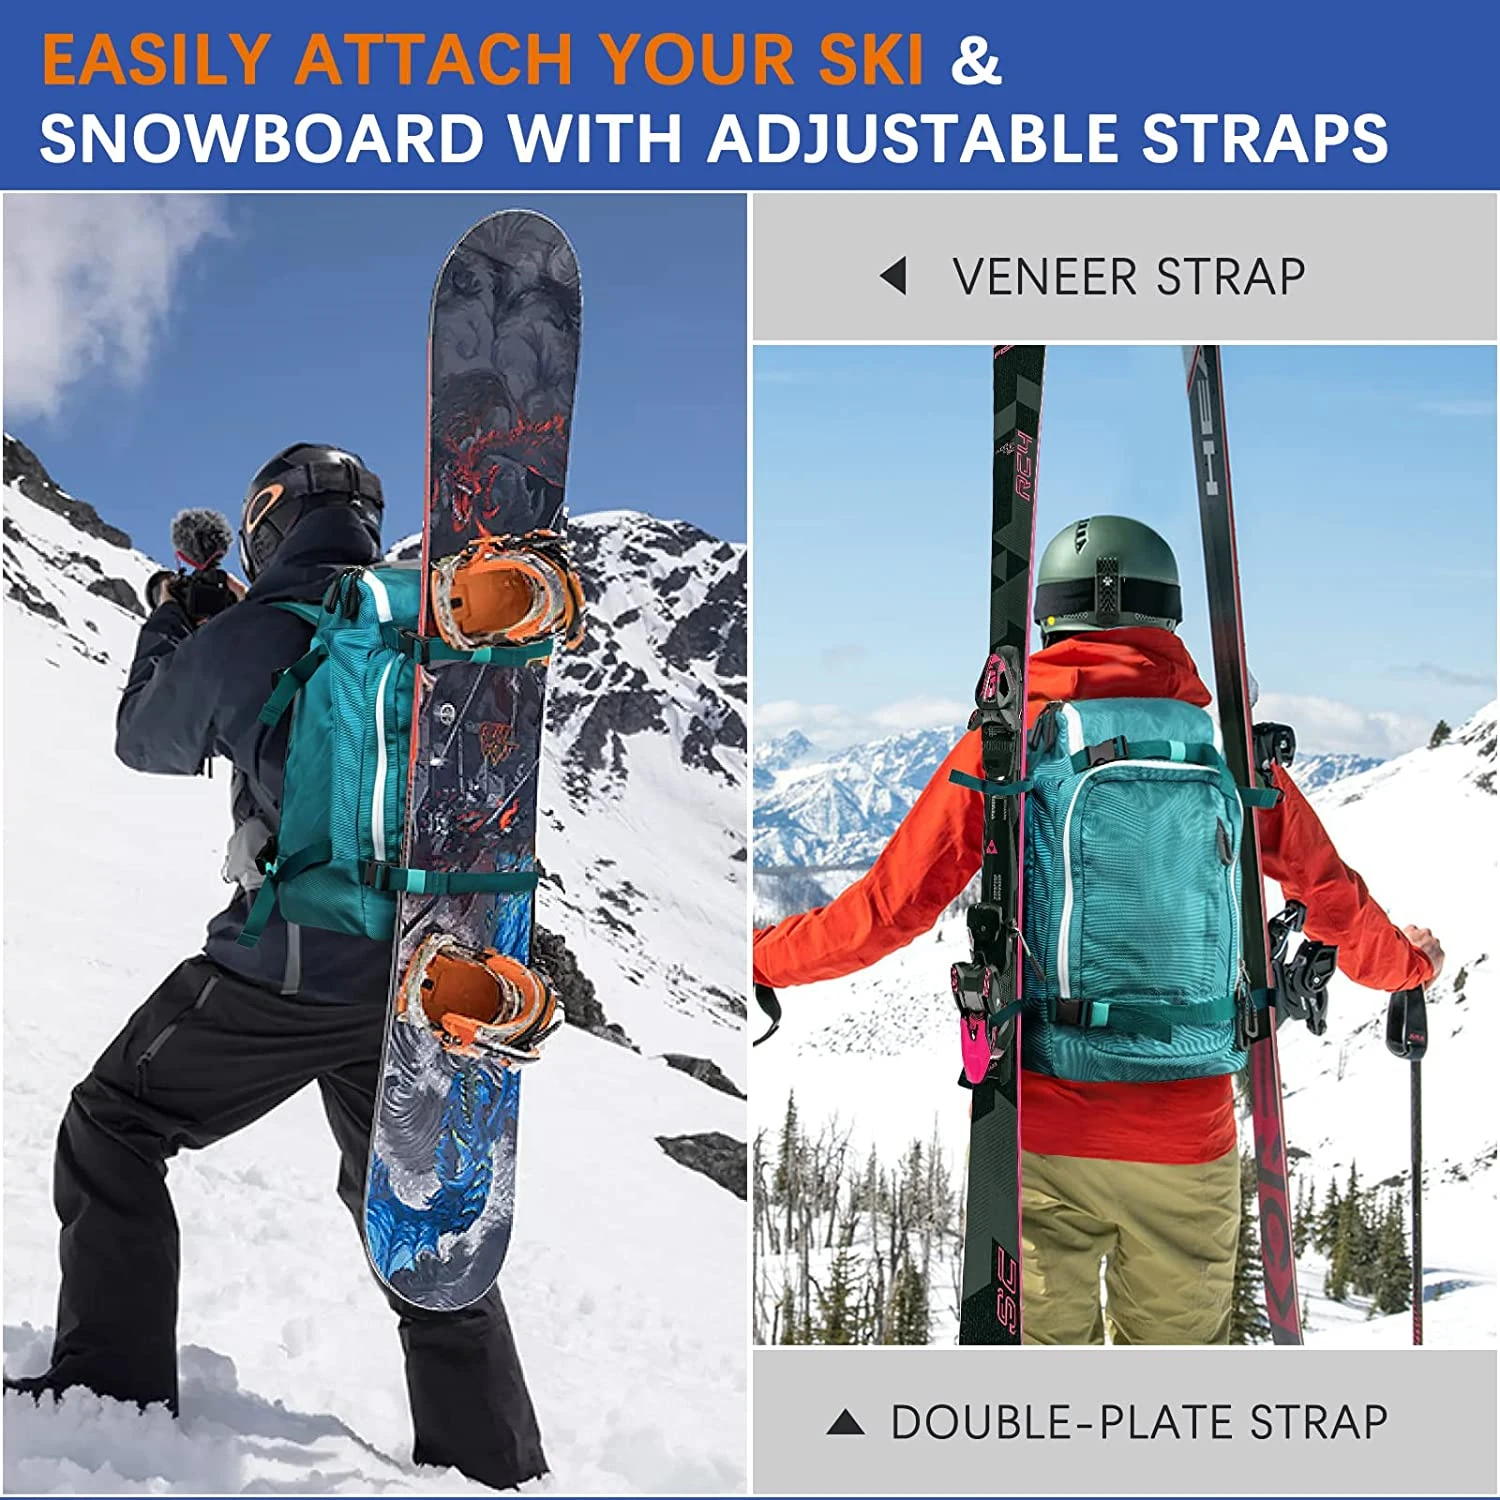 OEM Skiing and Snowboarding Travel Luggage Bag Ski Boot Backpack Bag